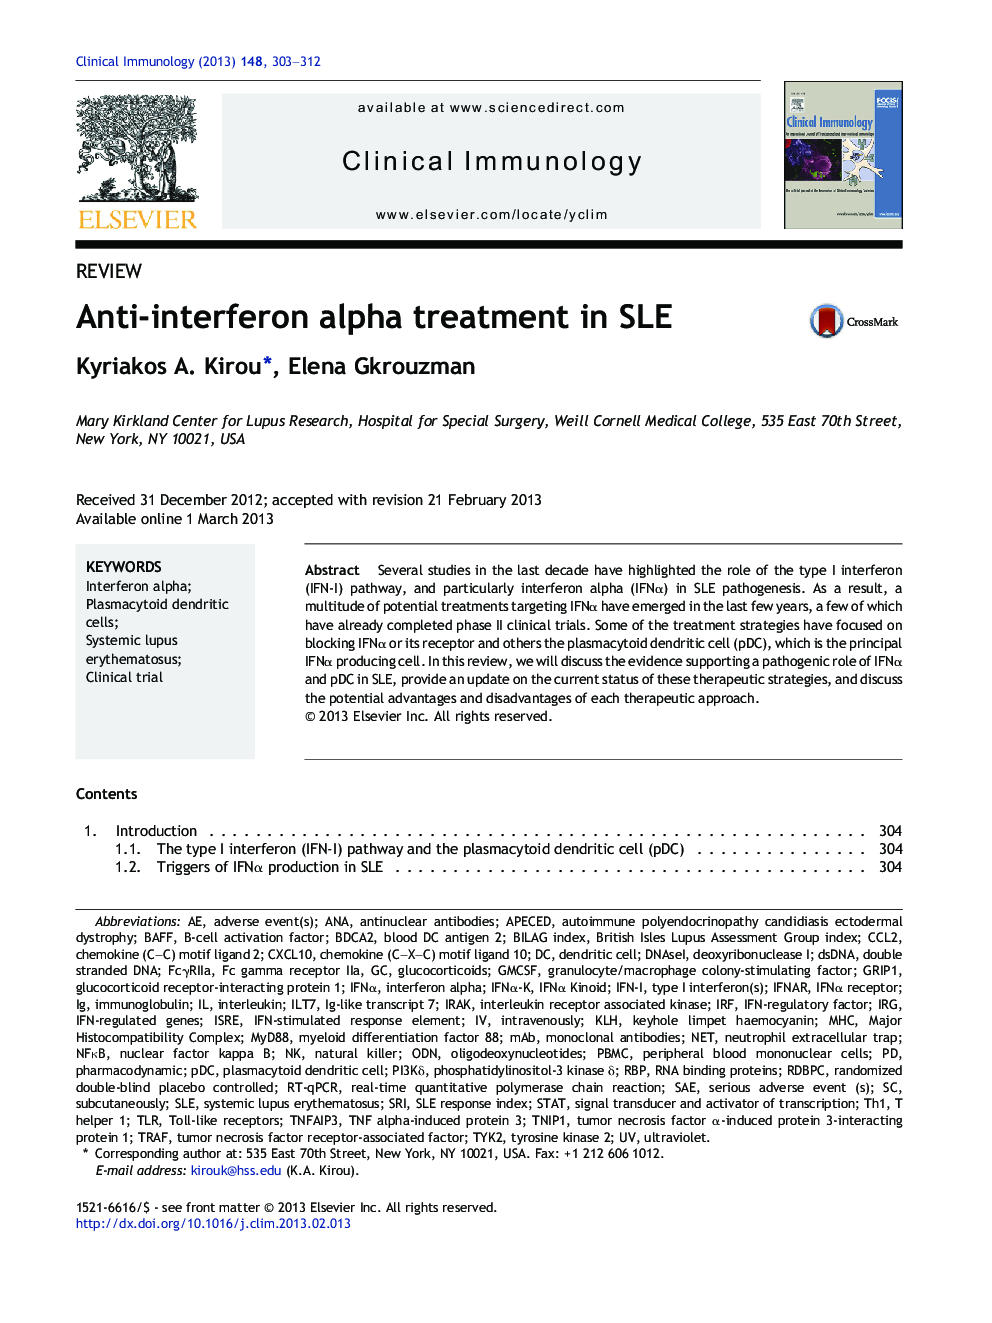 ReviewAnti-interferon alpha treatment in SLE